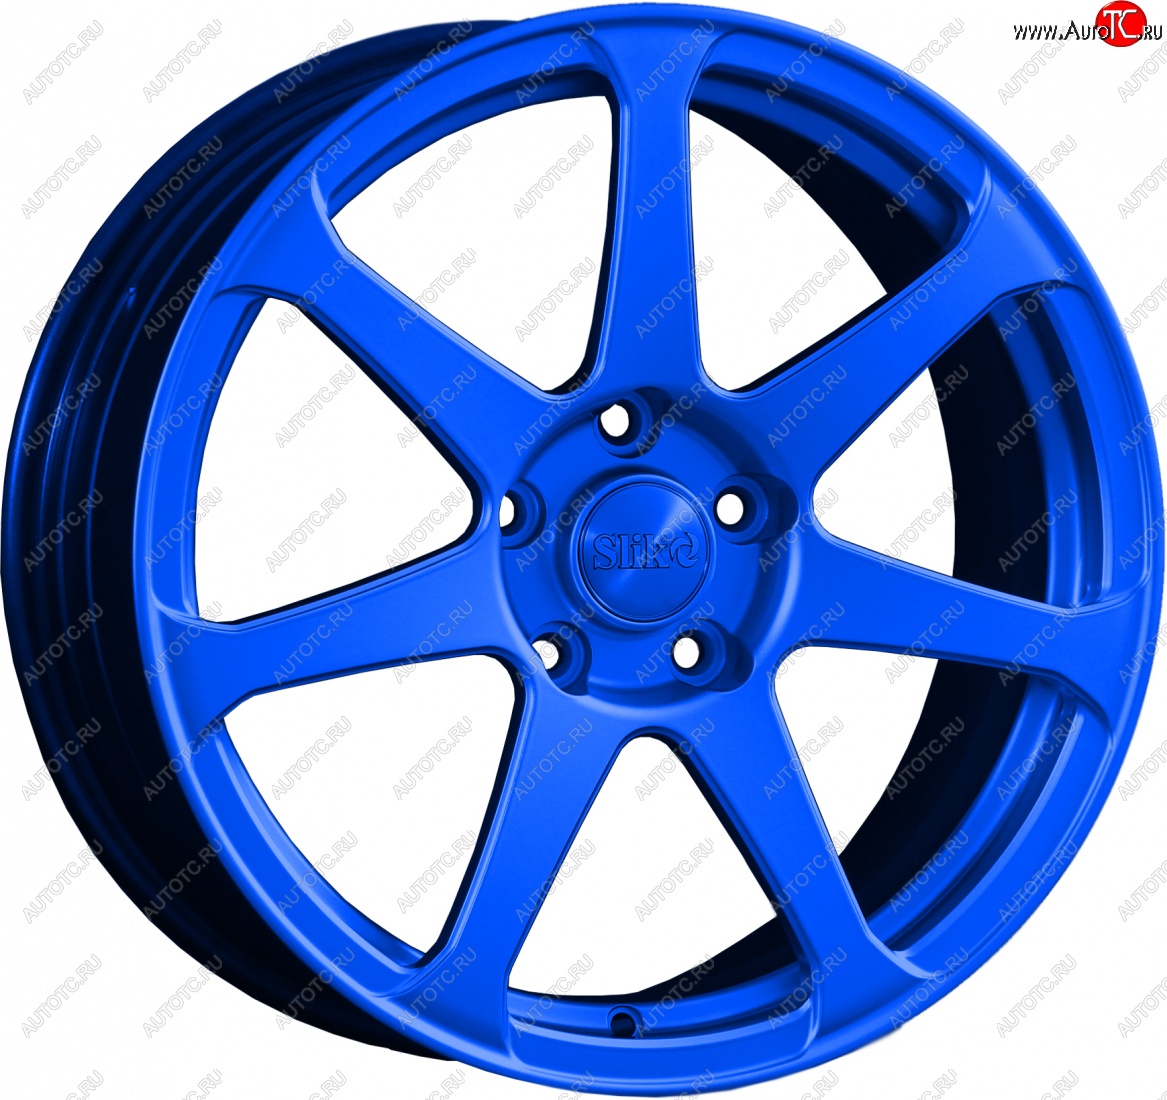 14 499 р. Кованый диск Slik classik R17x7.5 Candy BLUE синий 7.5x17 Toyota Allex E12# 2-ой рестайлинг (2004-2006) 4x100.0xDIA54.1xET39.0 (Цвет: Candy BLUE синий 7.5x17)